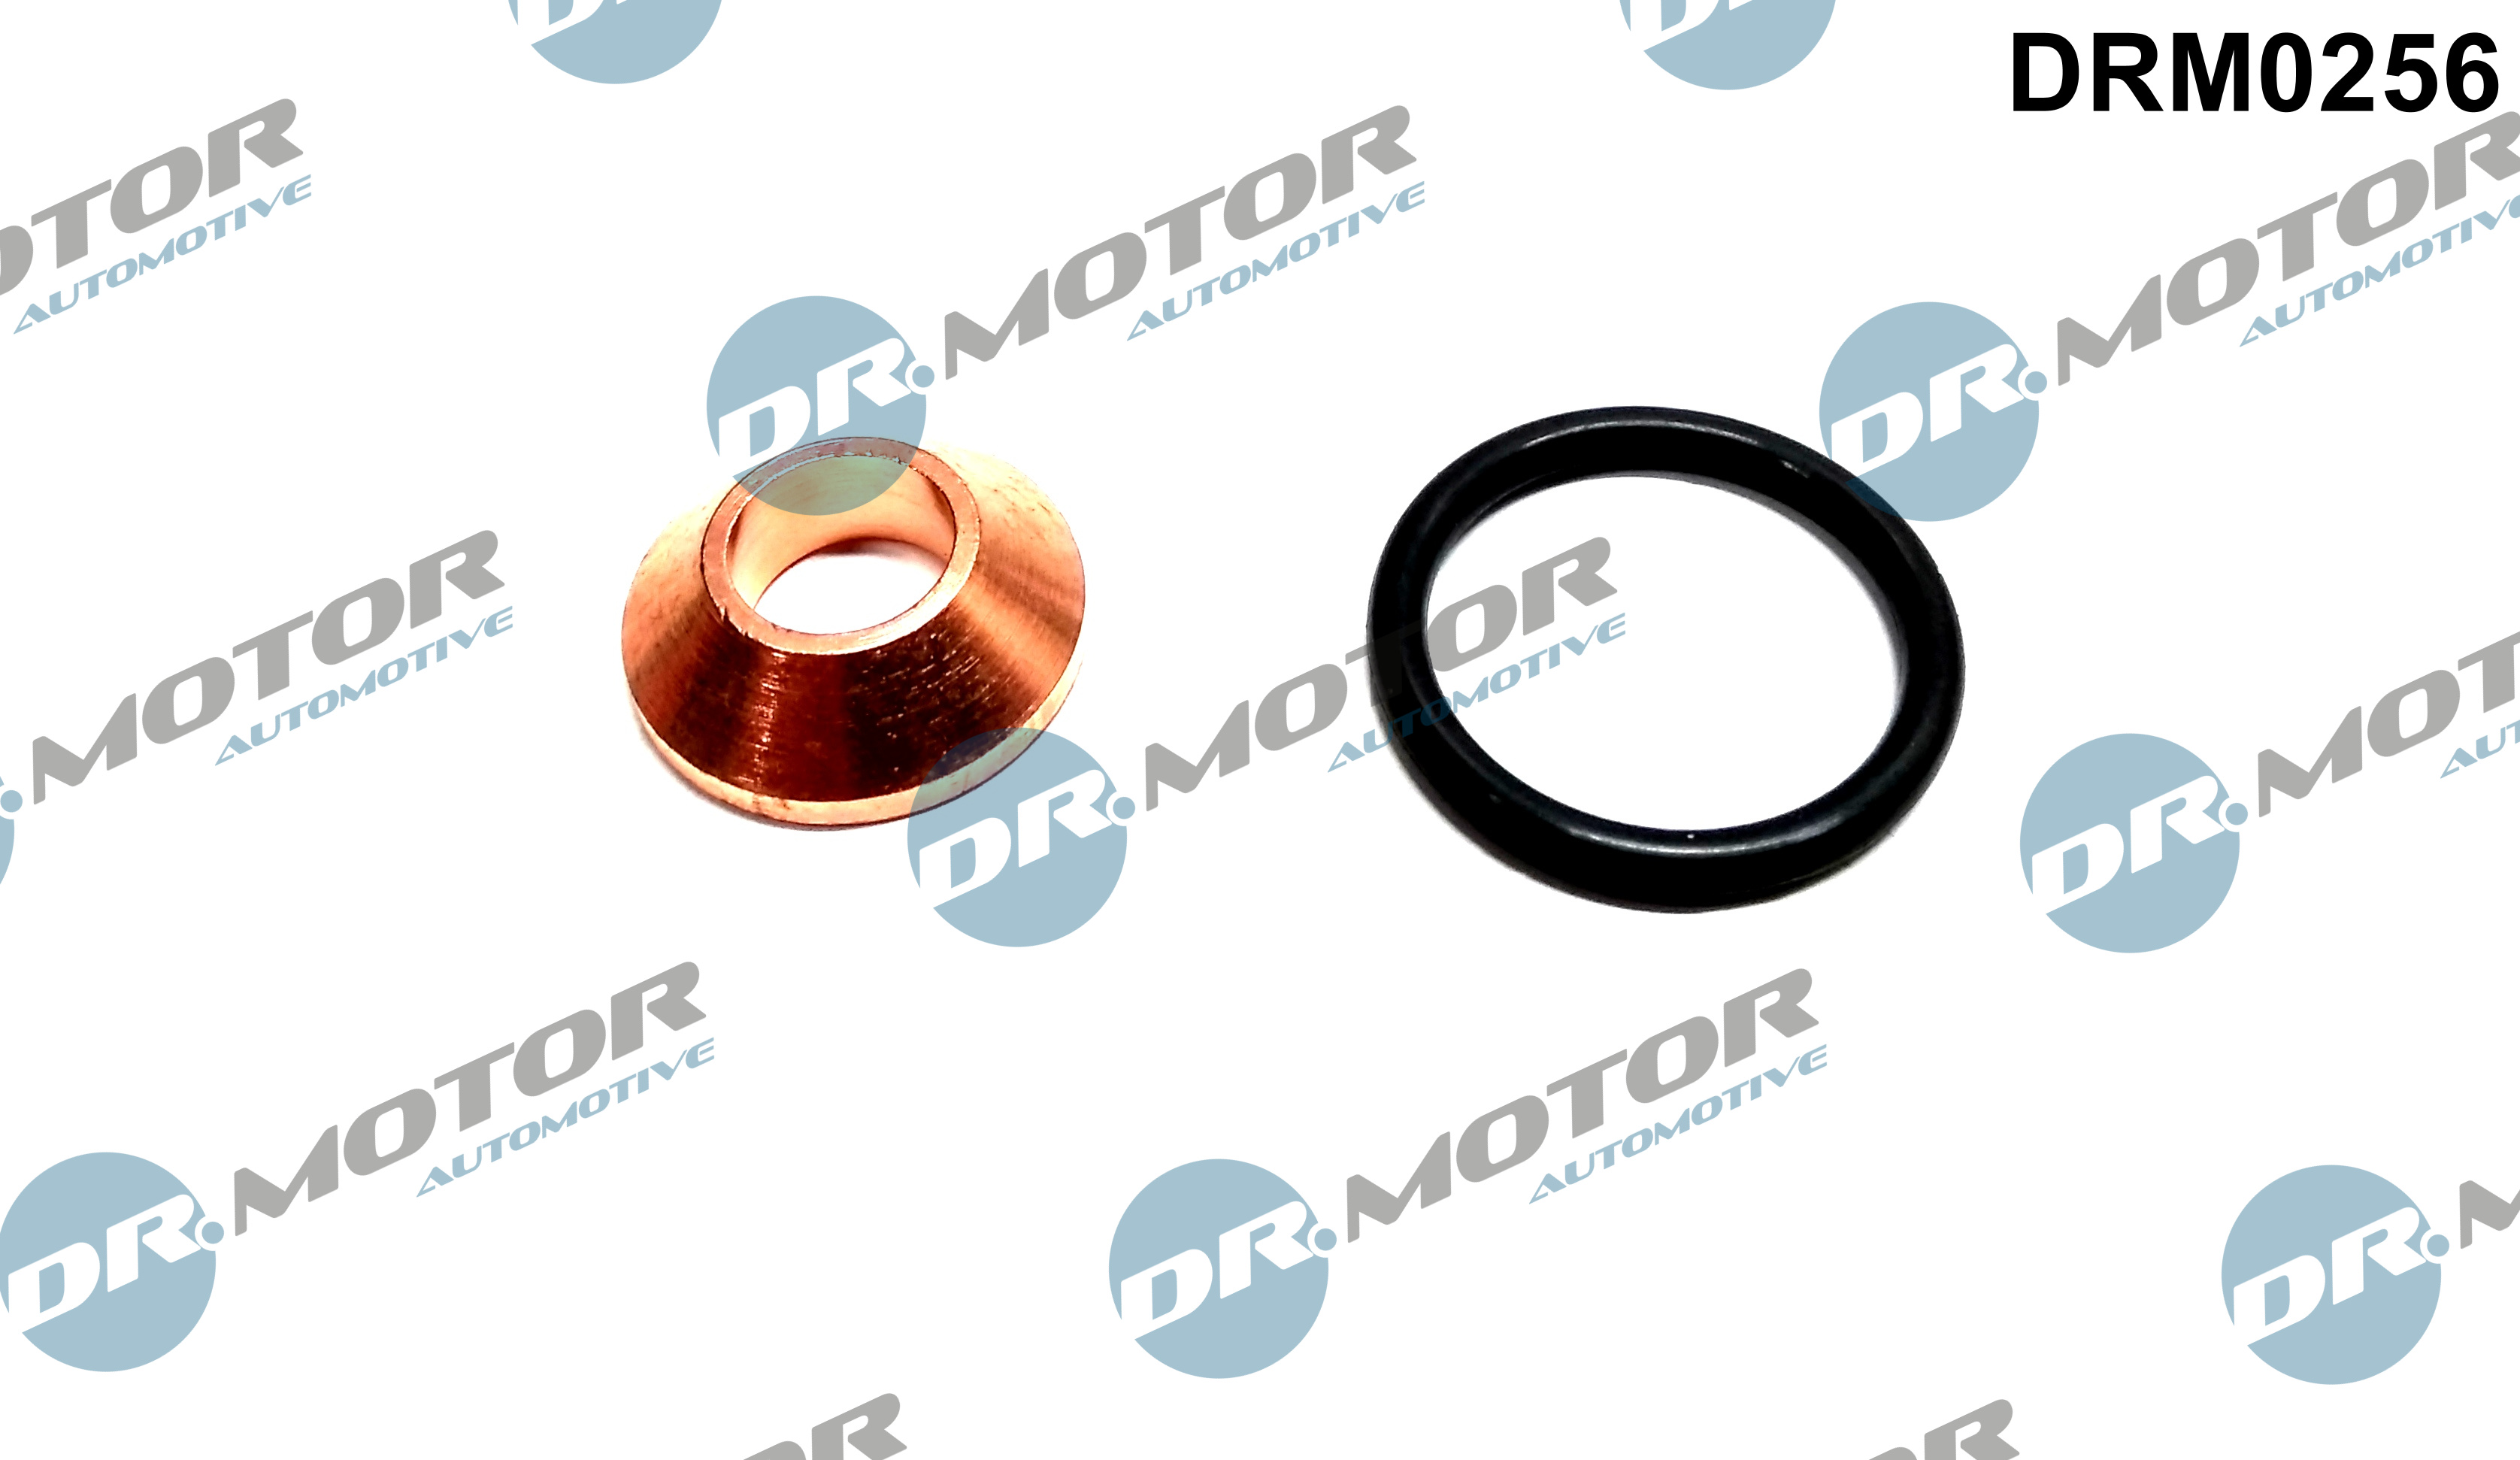 Tesniaci krúžok držiaka trysky Opel Astra G 1.7 DTI, 1.7 DI DR.MOTOR DRM0256